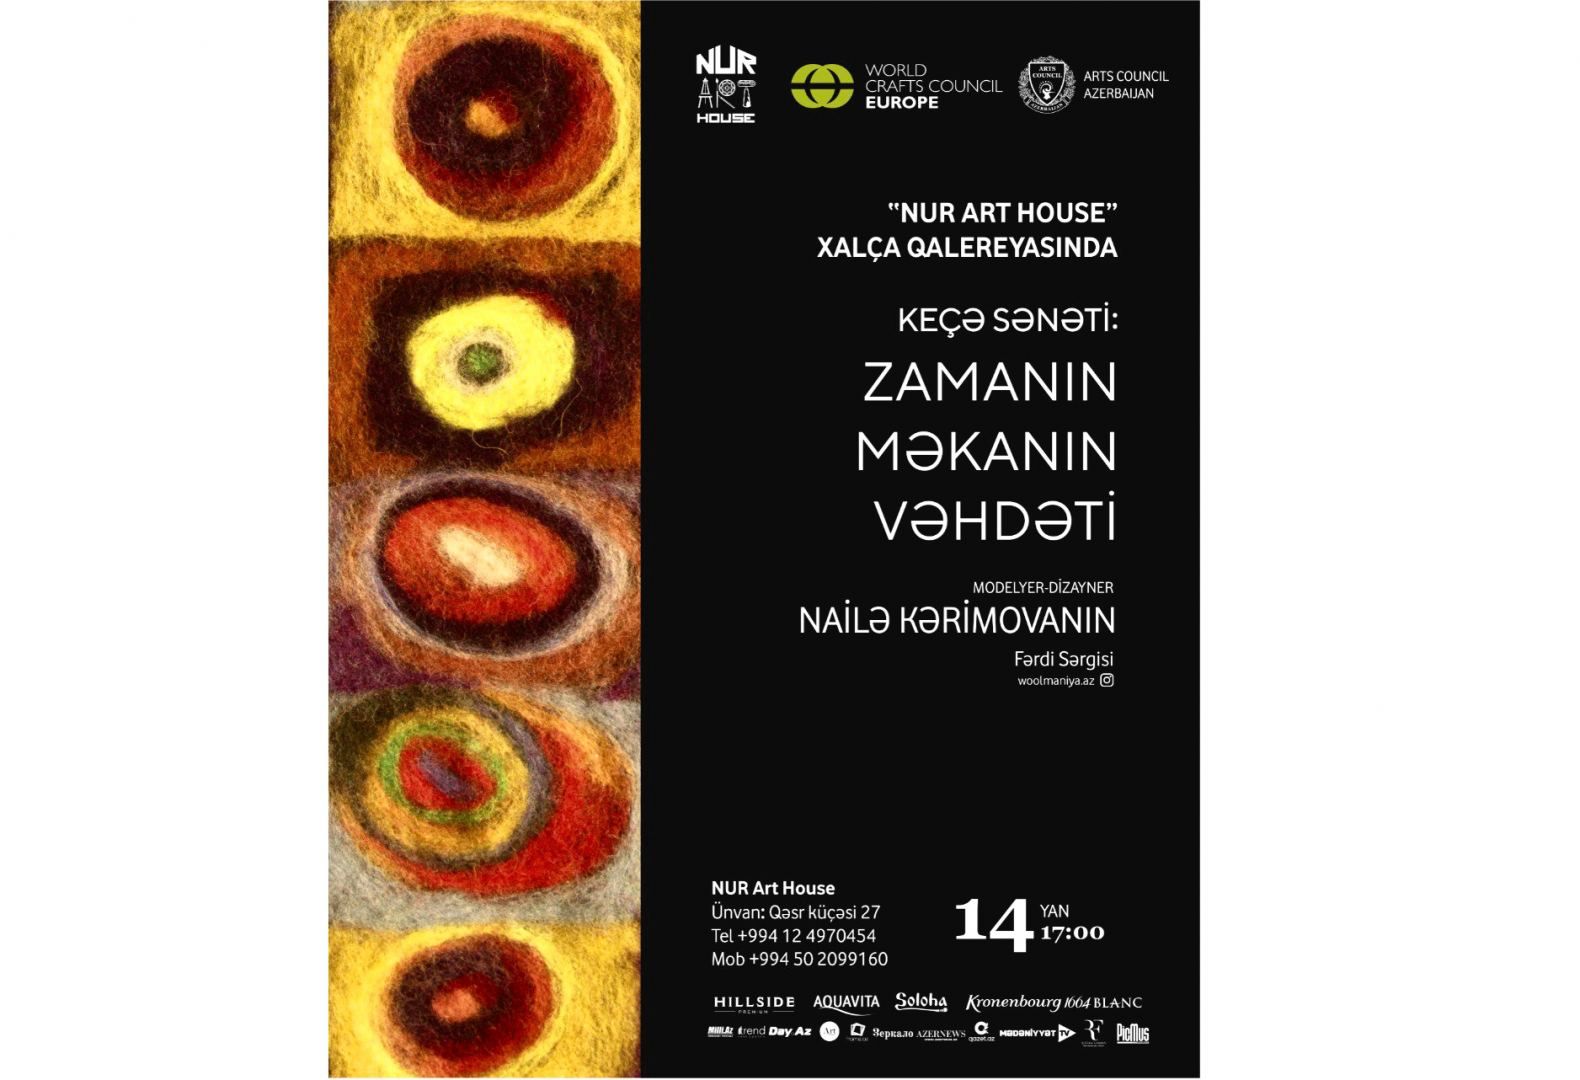 NUR Art House to host felt art exhibition